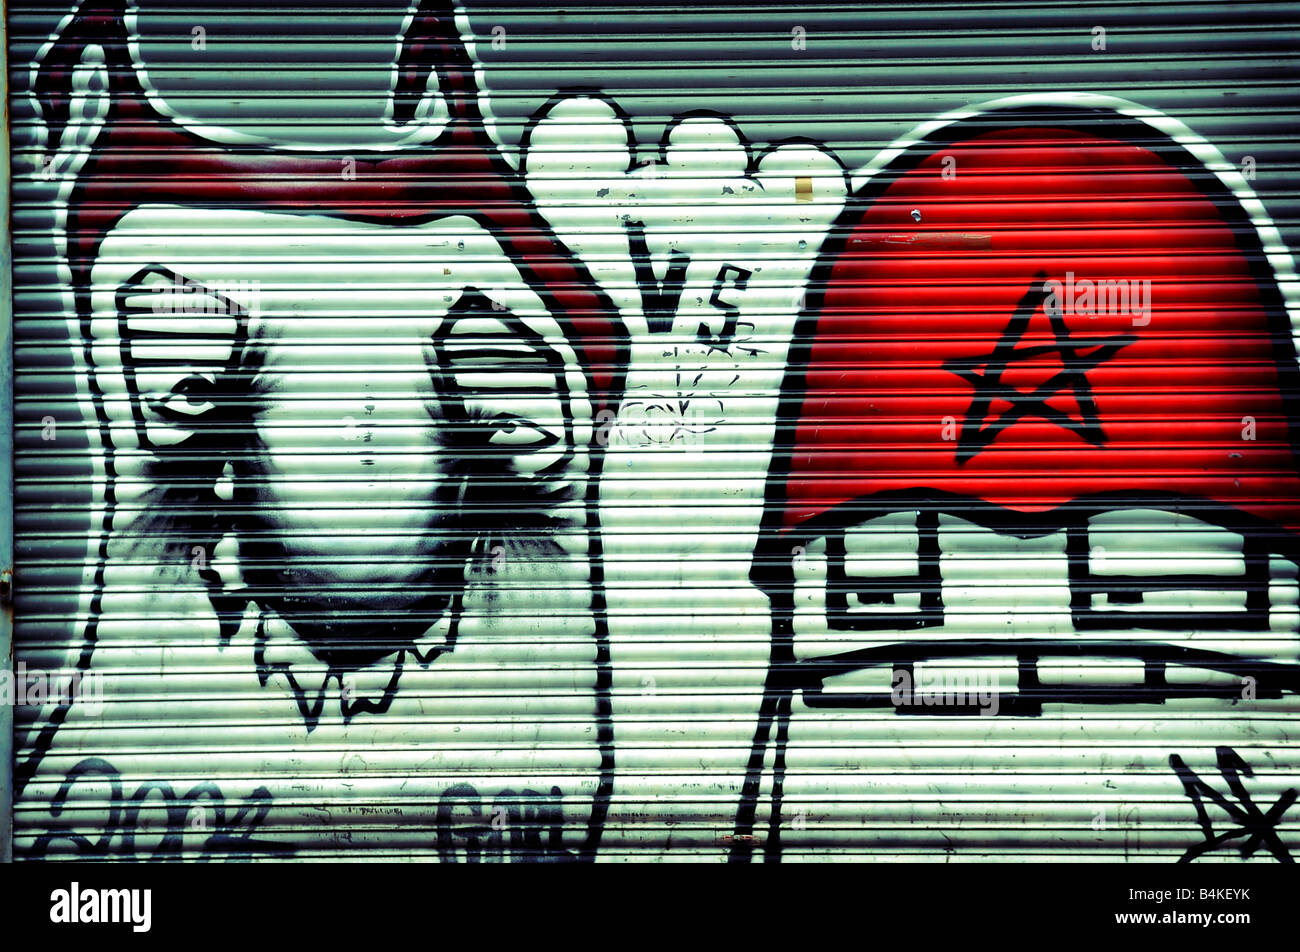 graffiti art spraypaint thomas street northern quarter manchester england uk city shutters cartoon characters red white Stock Photo